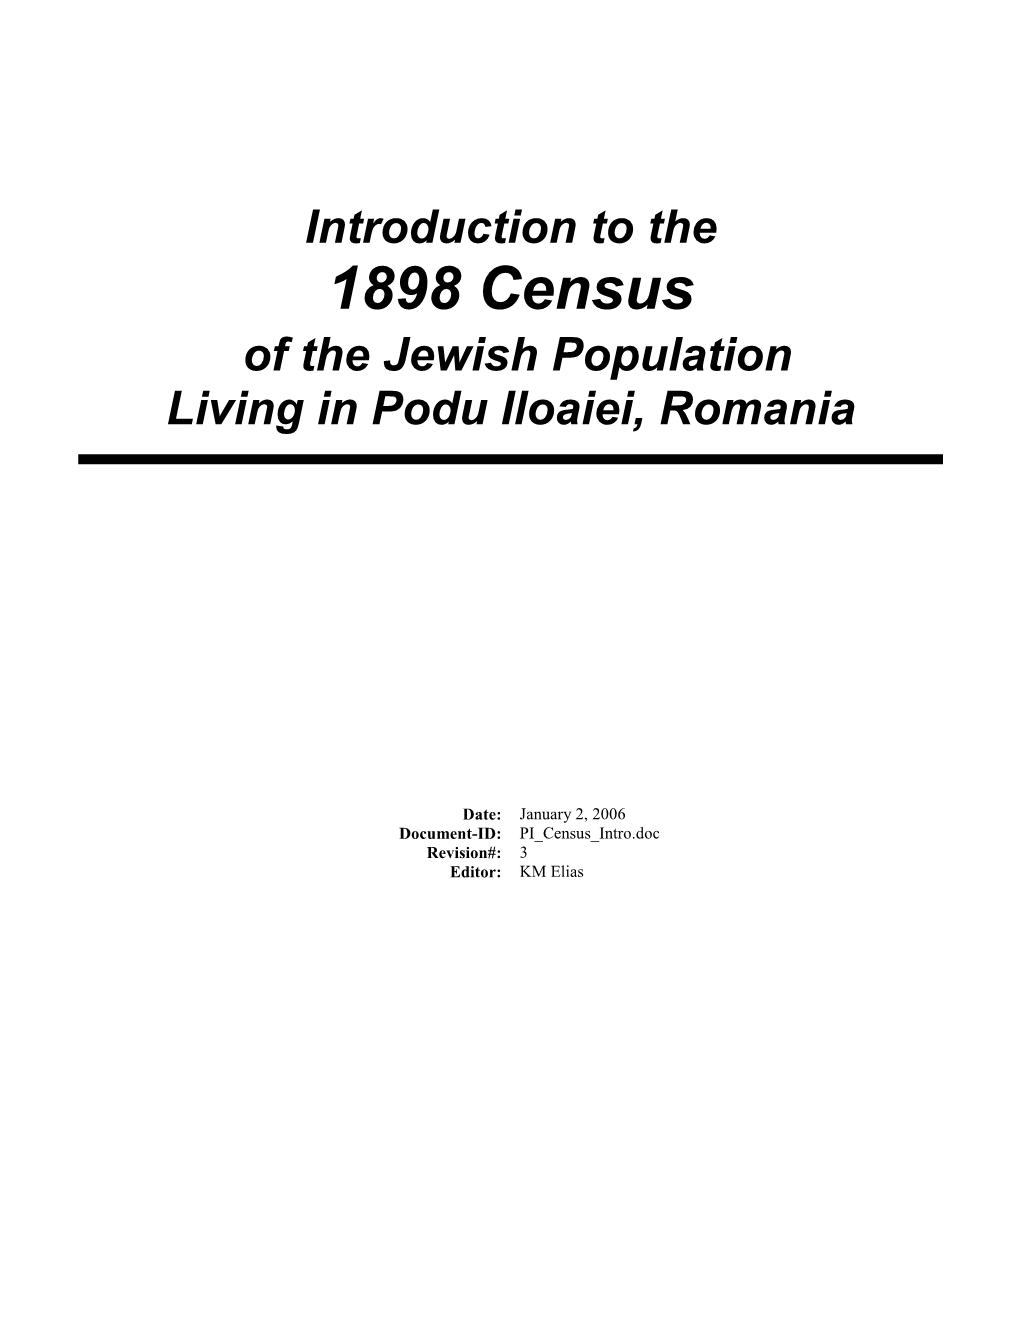 1898 Census of the Jewish Population Living in Podu Iloaiei, Romania